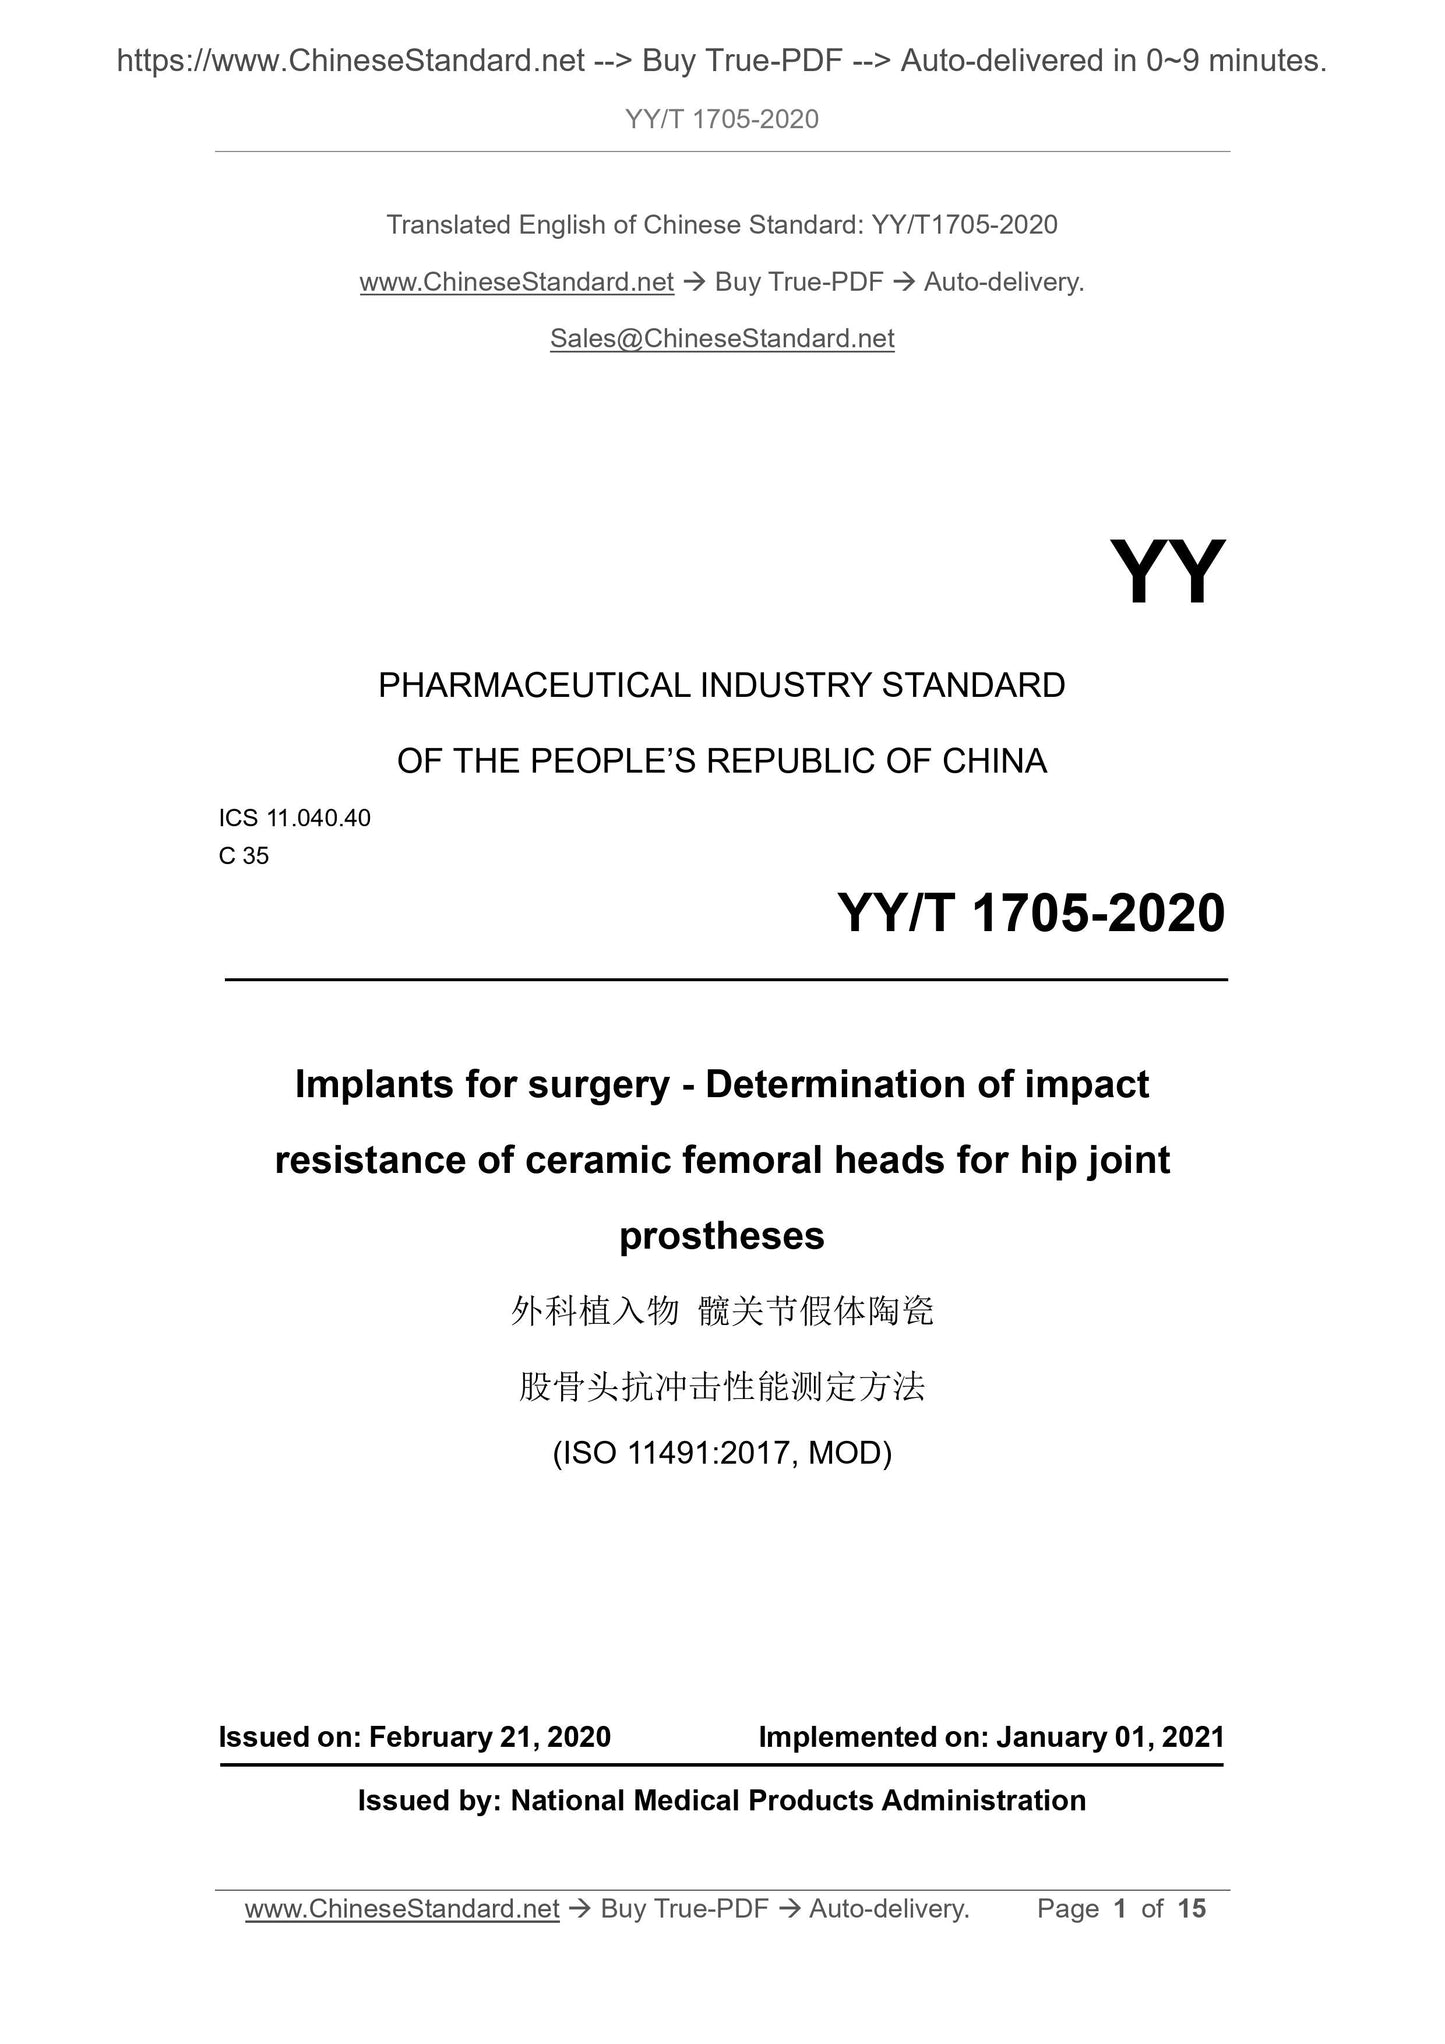 YY/T 1705-2020 Page 1